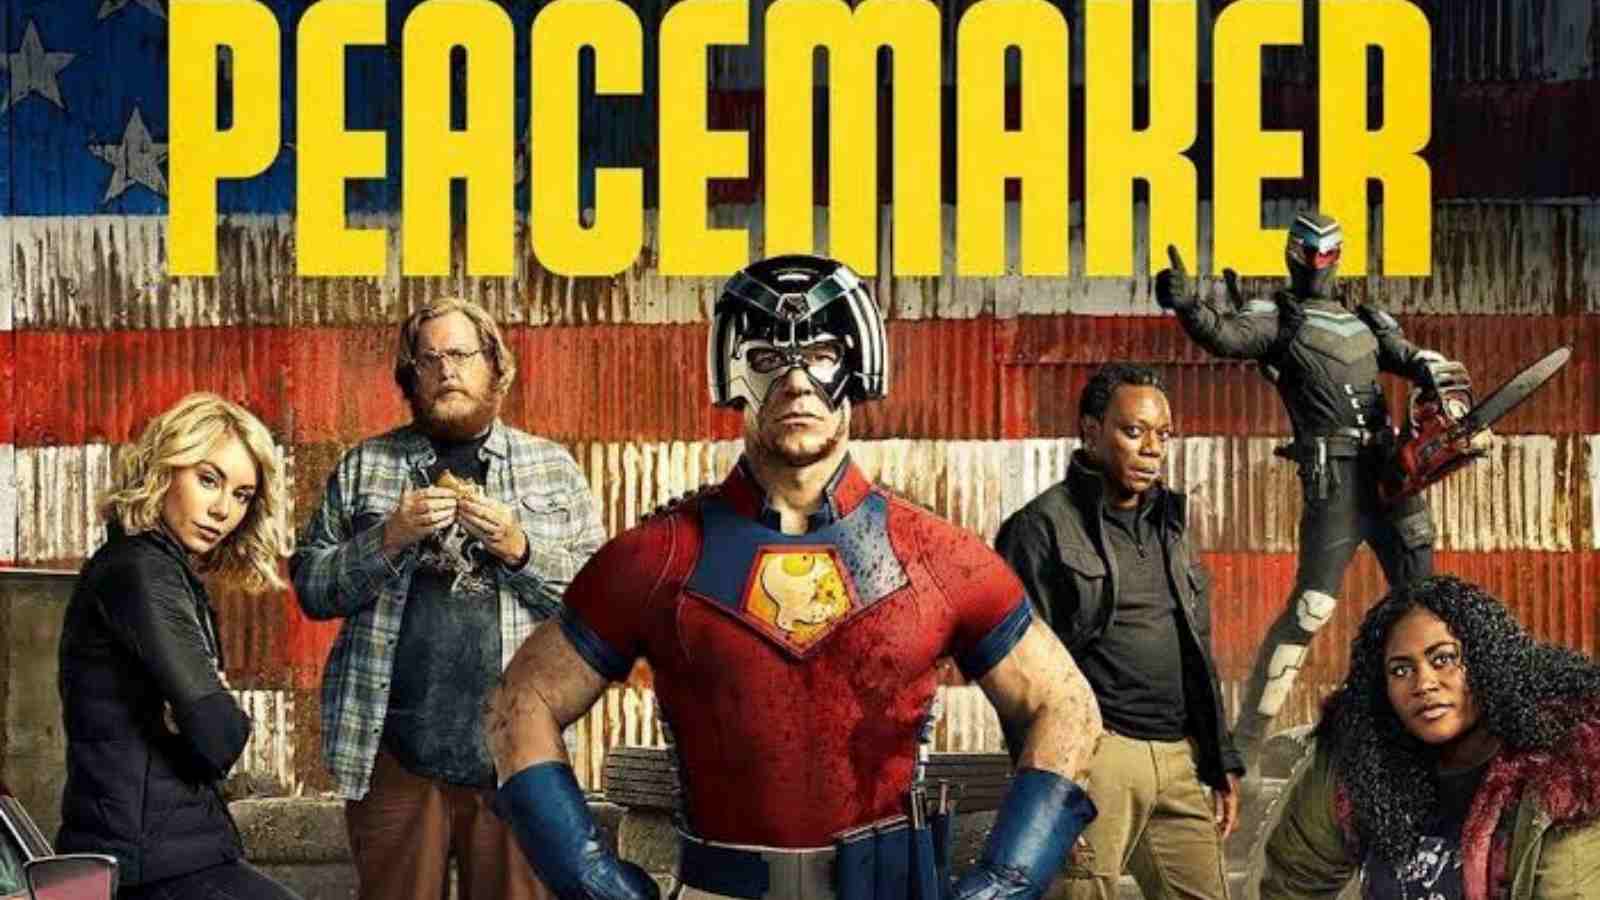 James Gunn's Peacemaker on HBO Max